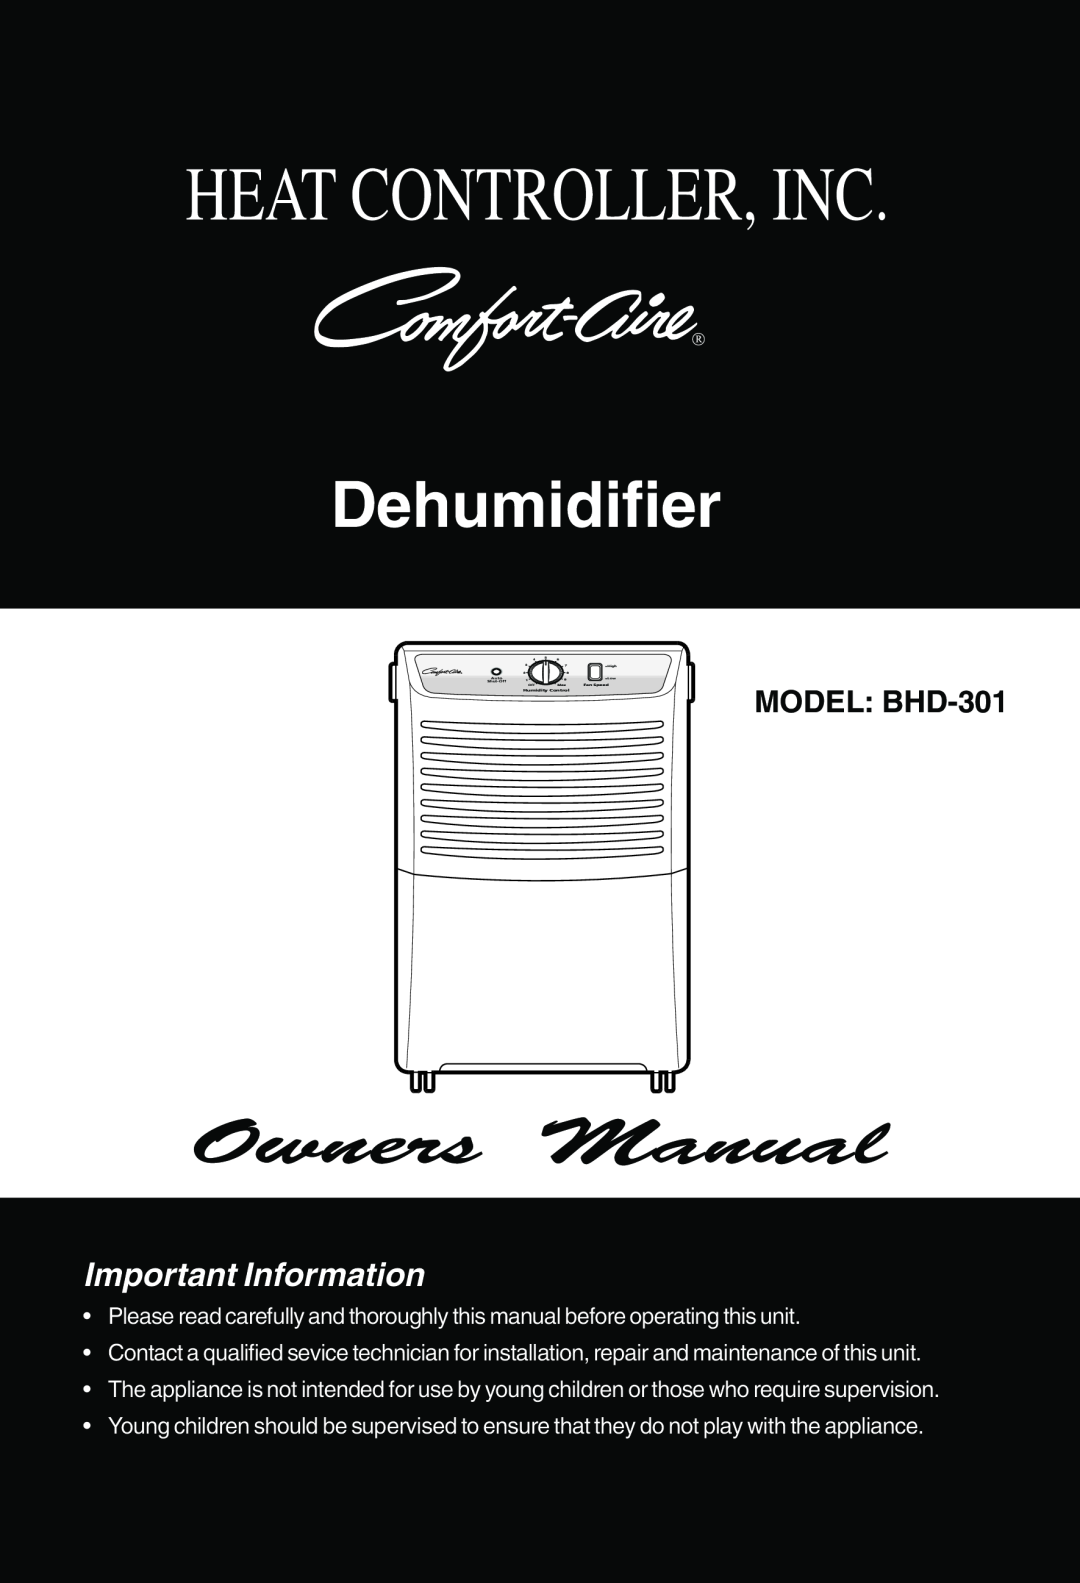 Heat Controller manual Heat Controller, Inc, Dehumidifier, Important Information, MODEL: BHD-301 